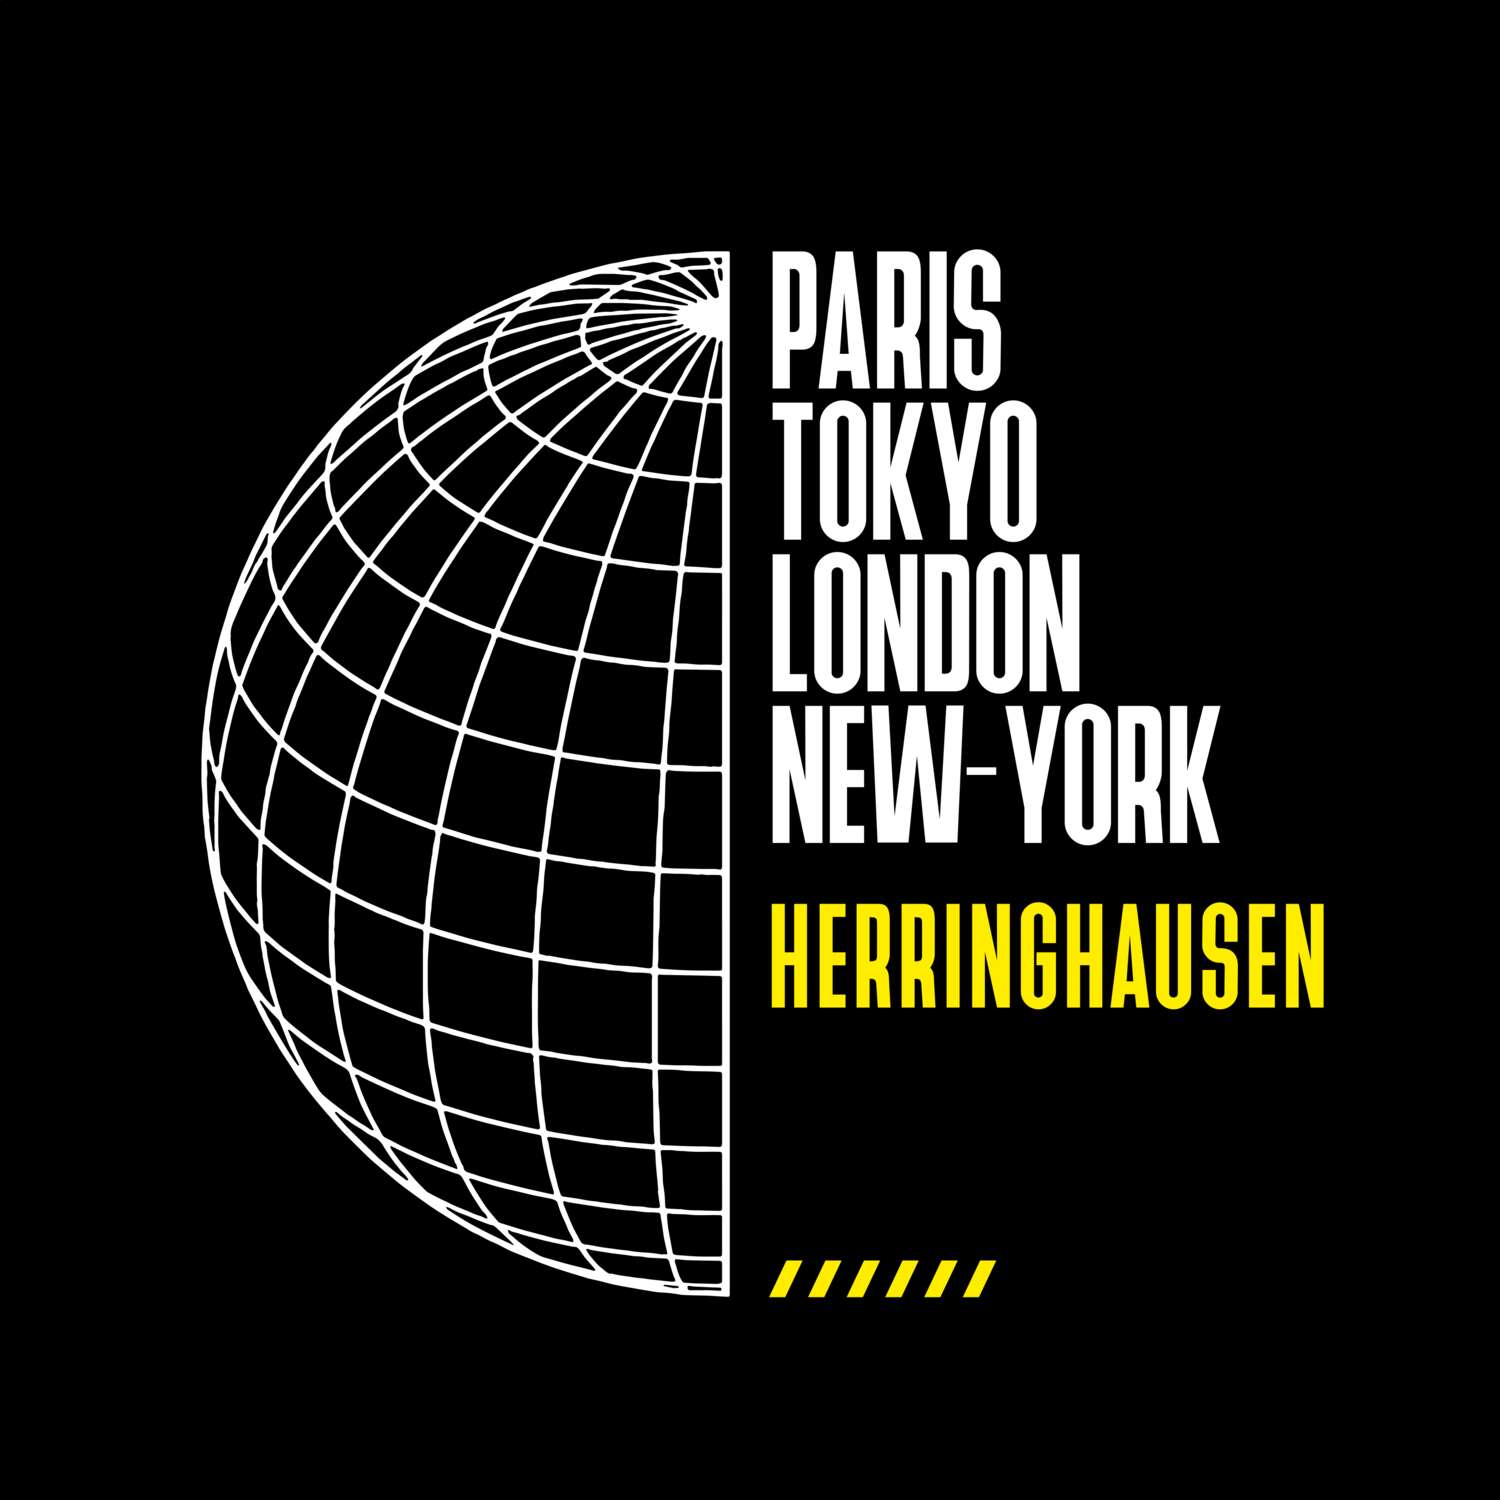 Herringhausen T-Shirt »Paris Tokyo London«